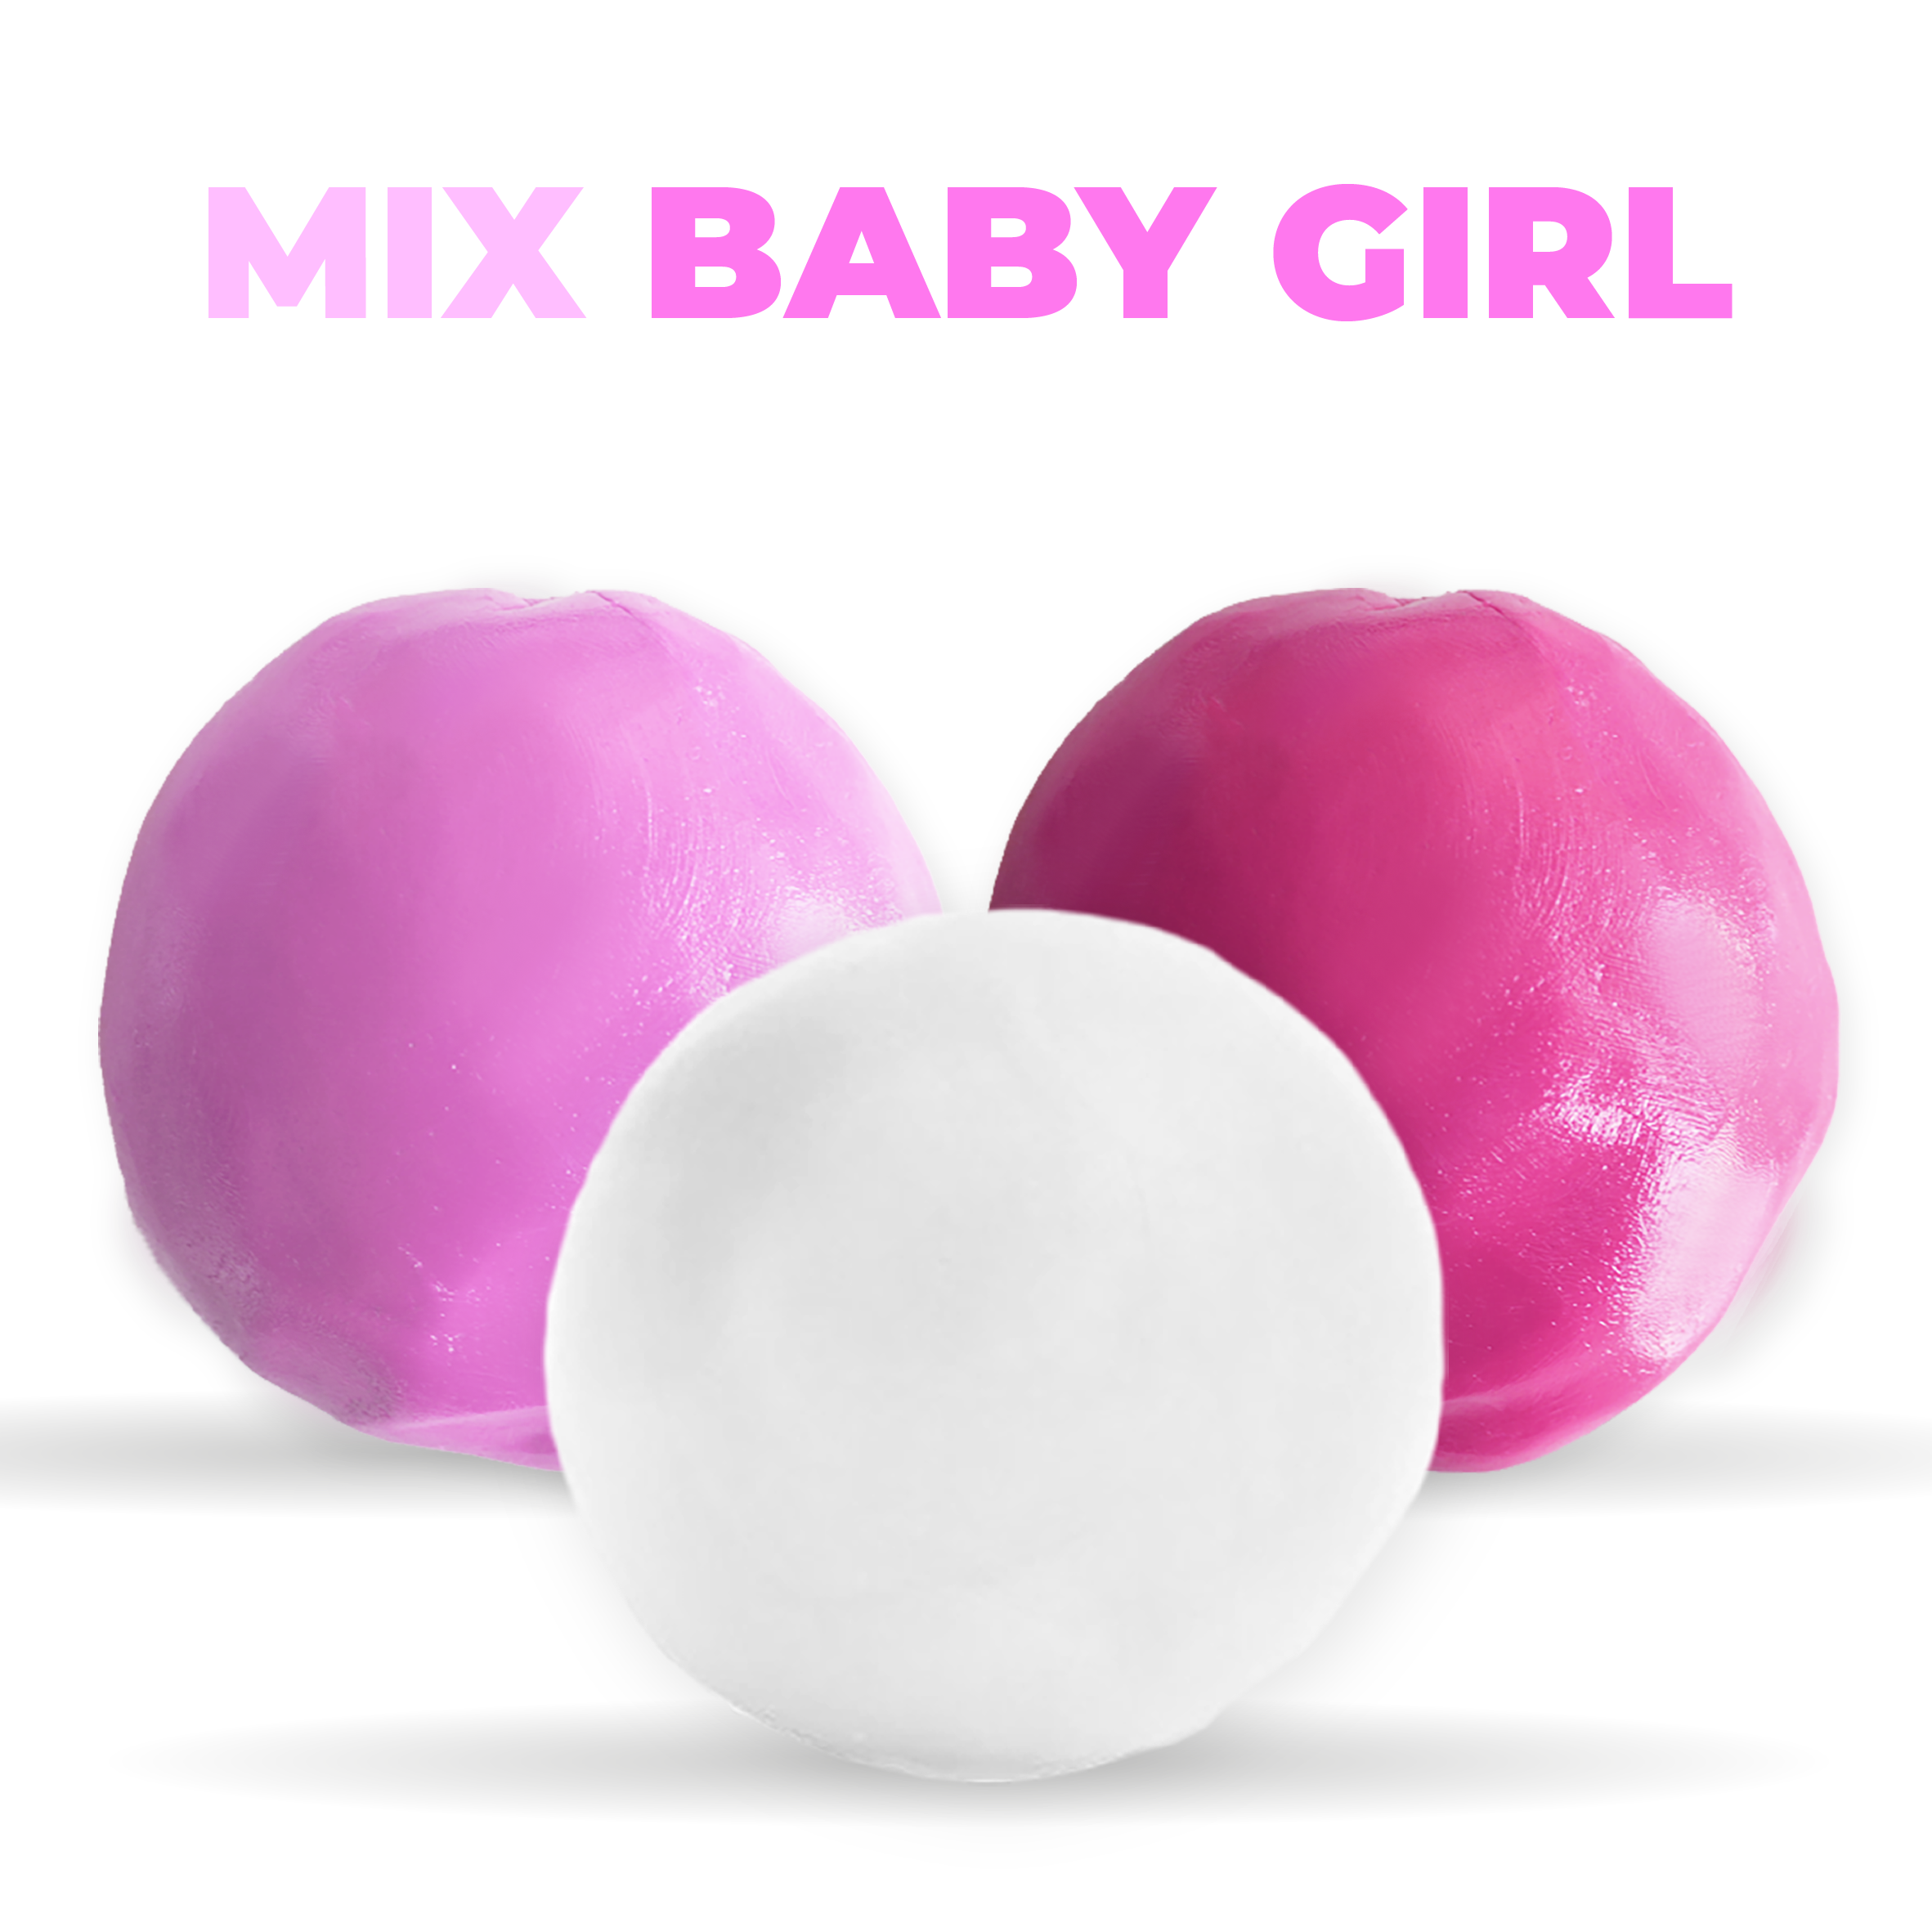 Fondant Mix Baby Girl